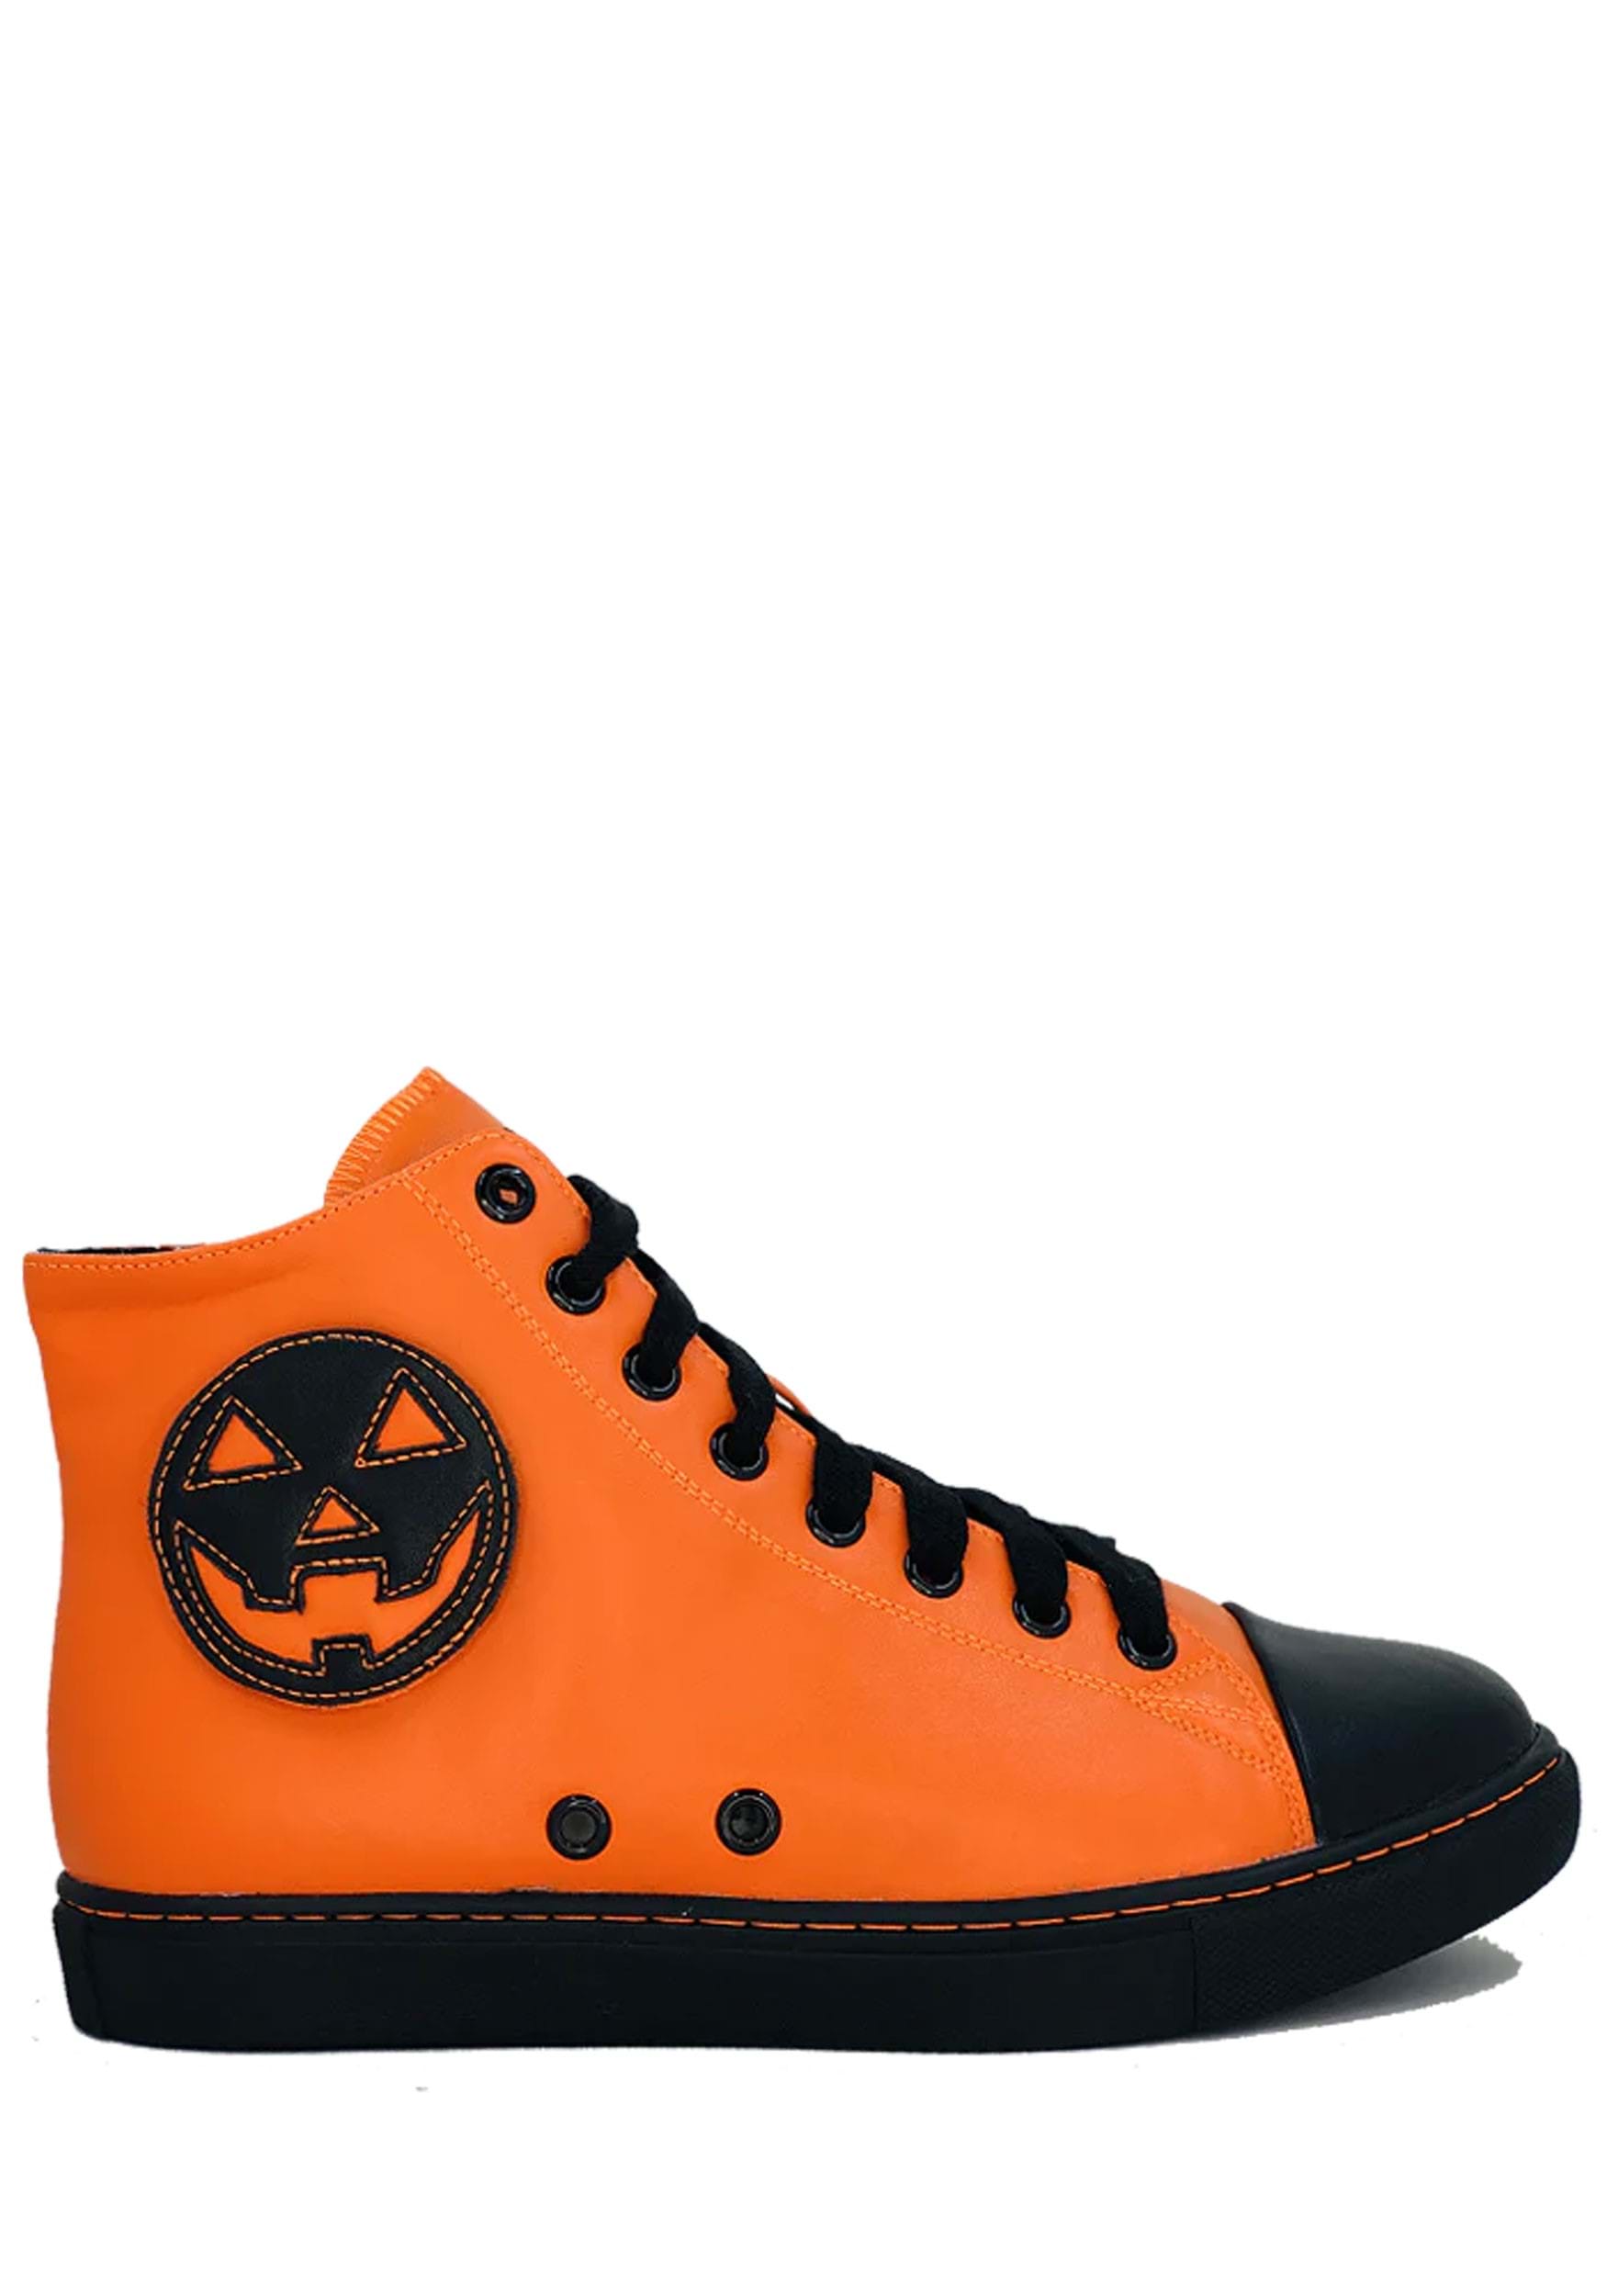 Image of Women's Orange Pumpkin Chelsea Jack High Top Sneaker | Halloween Footwear ID SVCHELSEAJACK-OR-8